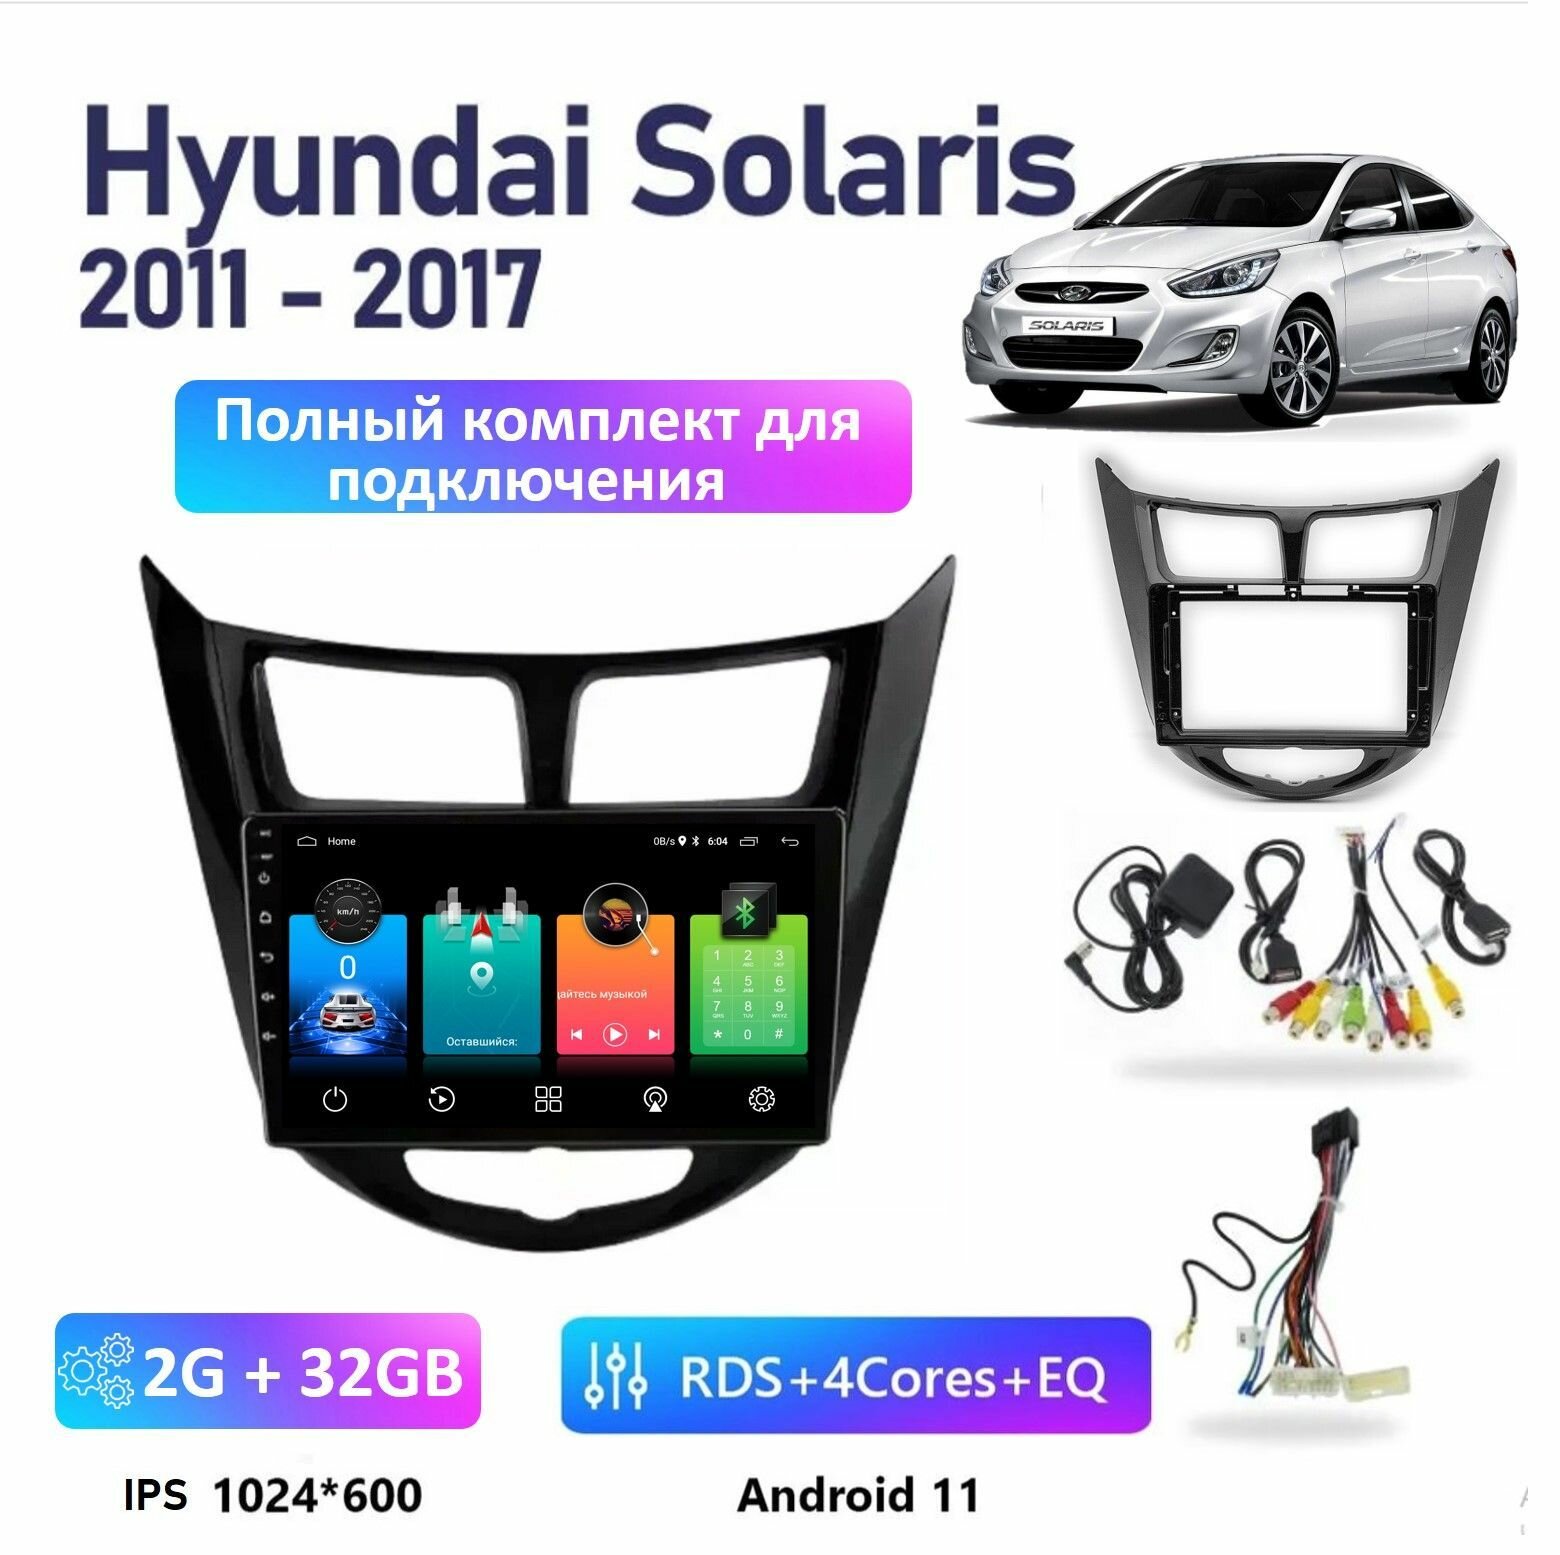 Автомагнитола Android 2Gb+32Gb Hyundai Solaris Солярис 2011 - 2017 / 9 дюймов / GPS / Bluetooth / Wi-Fi / FM - радио / Магнитола 2 дин на Андройд хендай Солярис 1